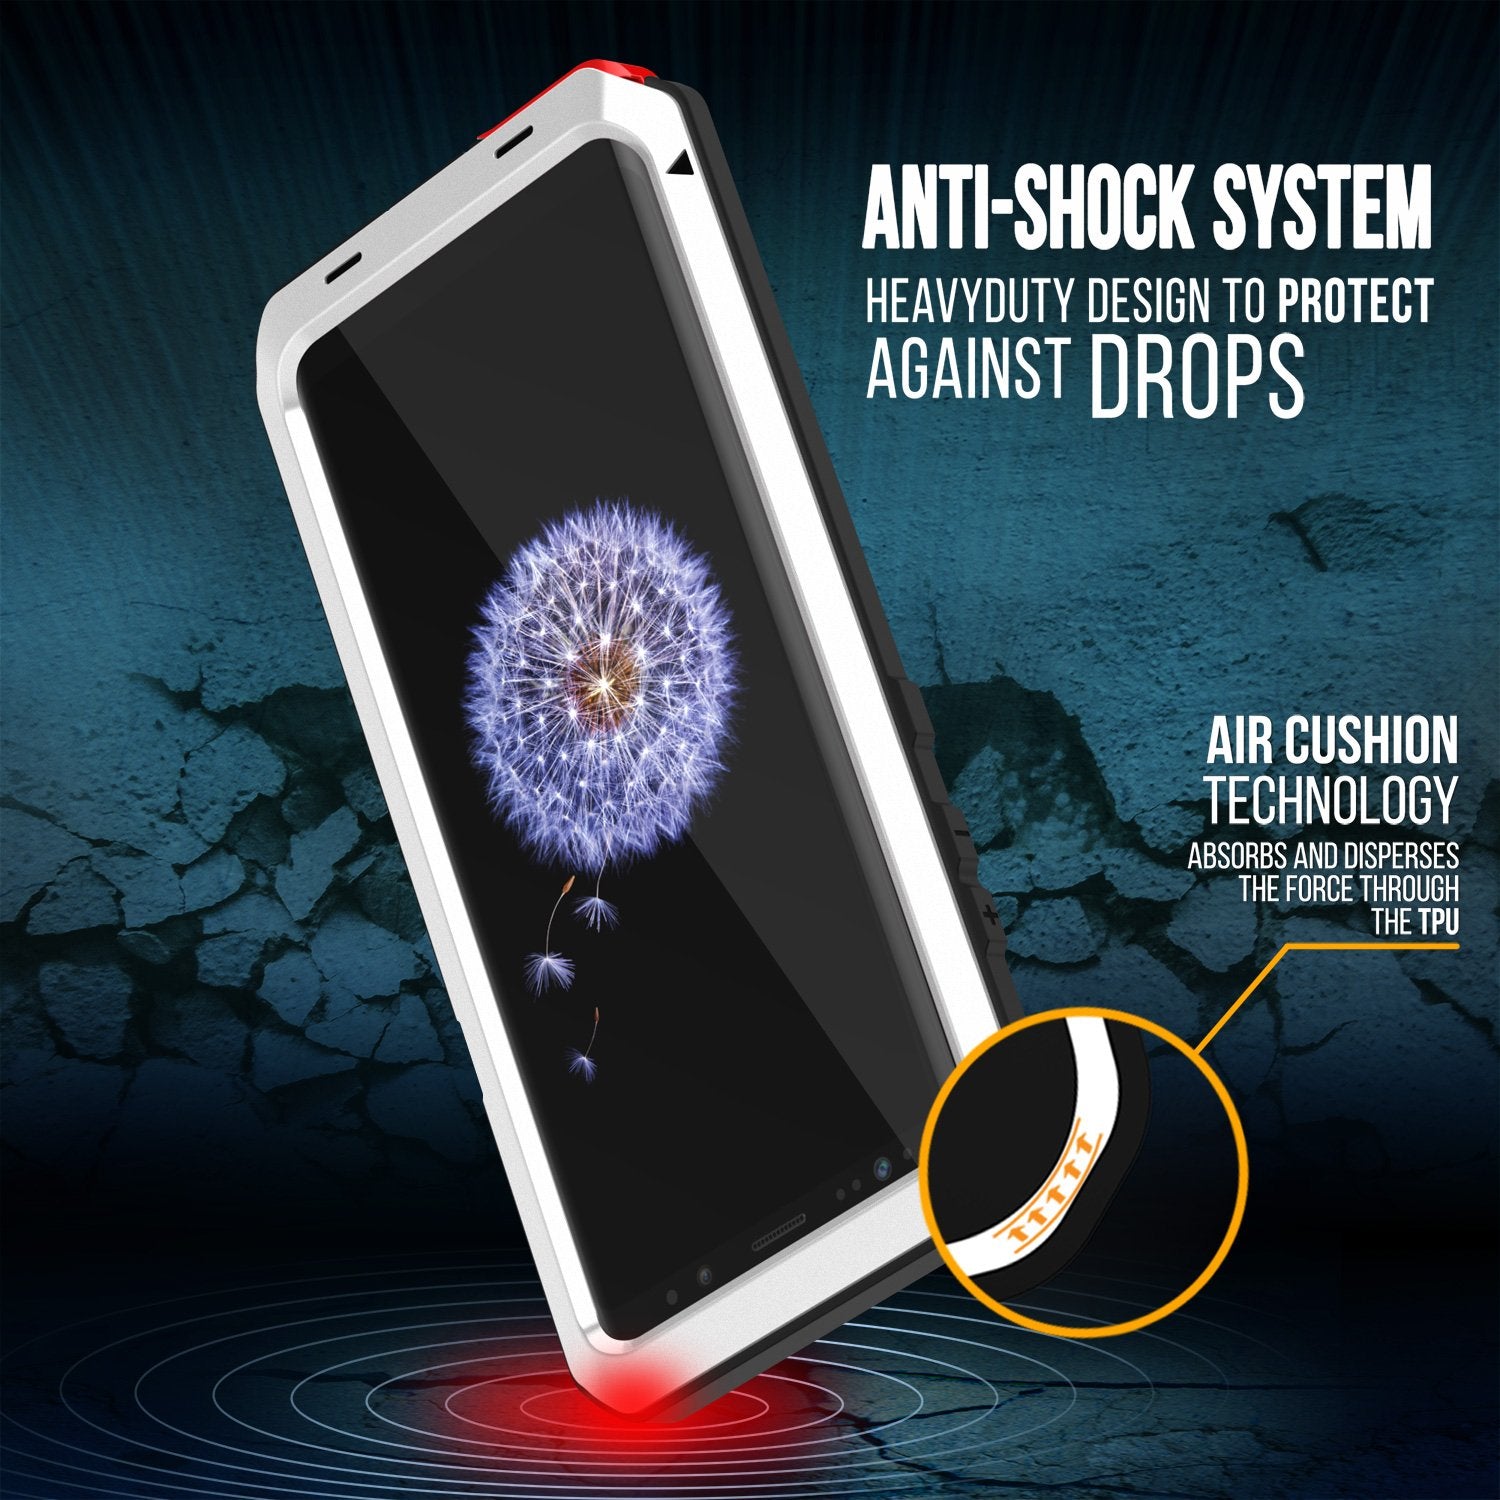 Galaxy S9 Hybrid Shock Drop Proof Metal Designed Case [White]